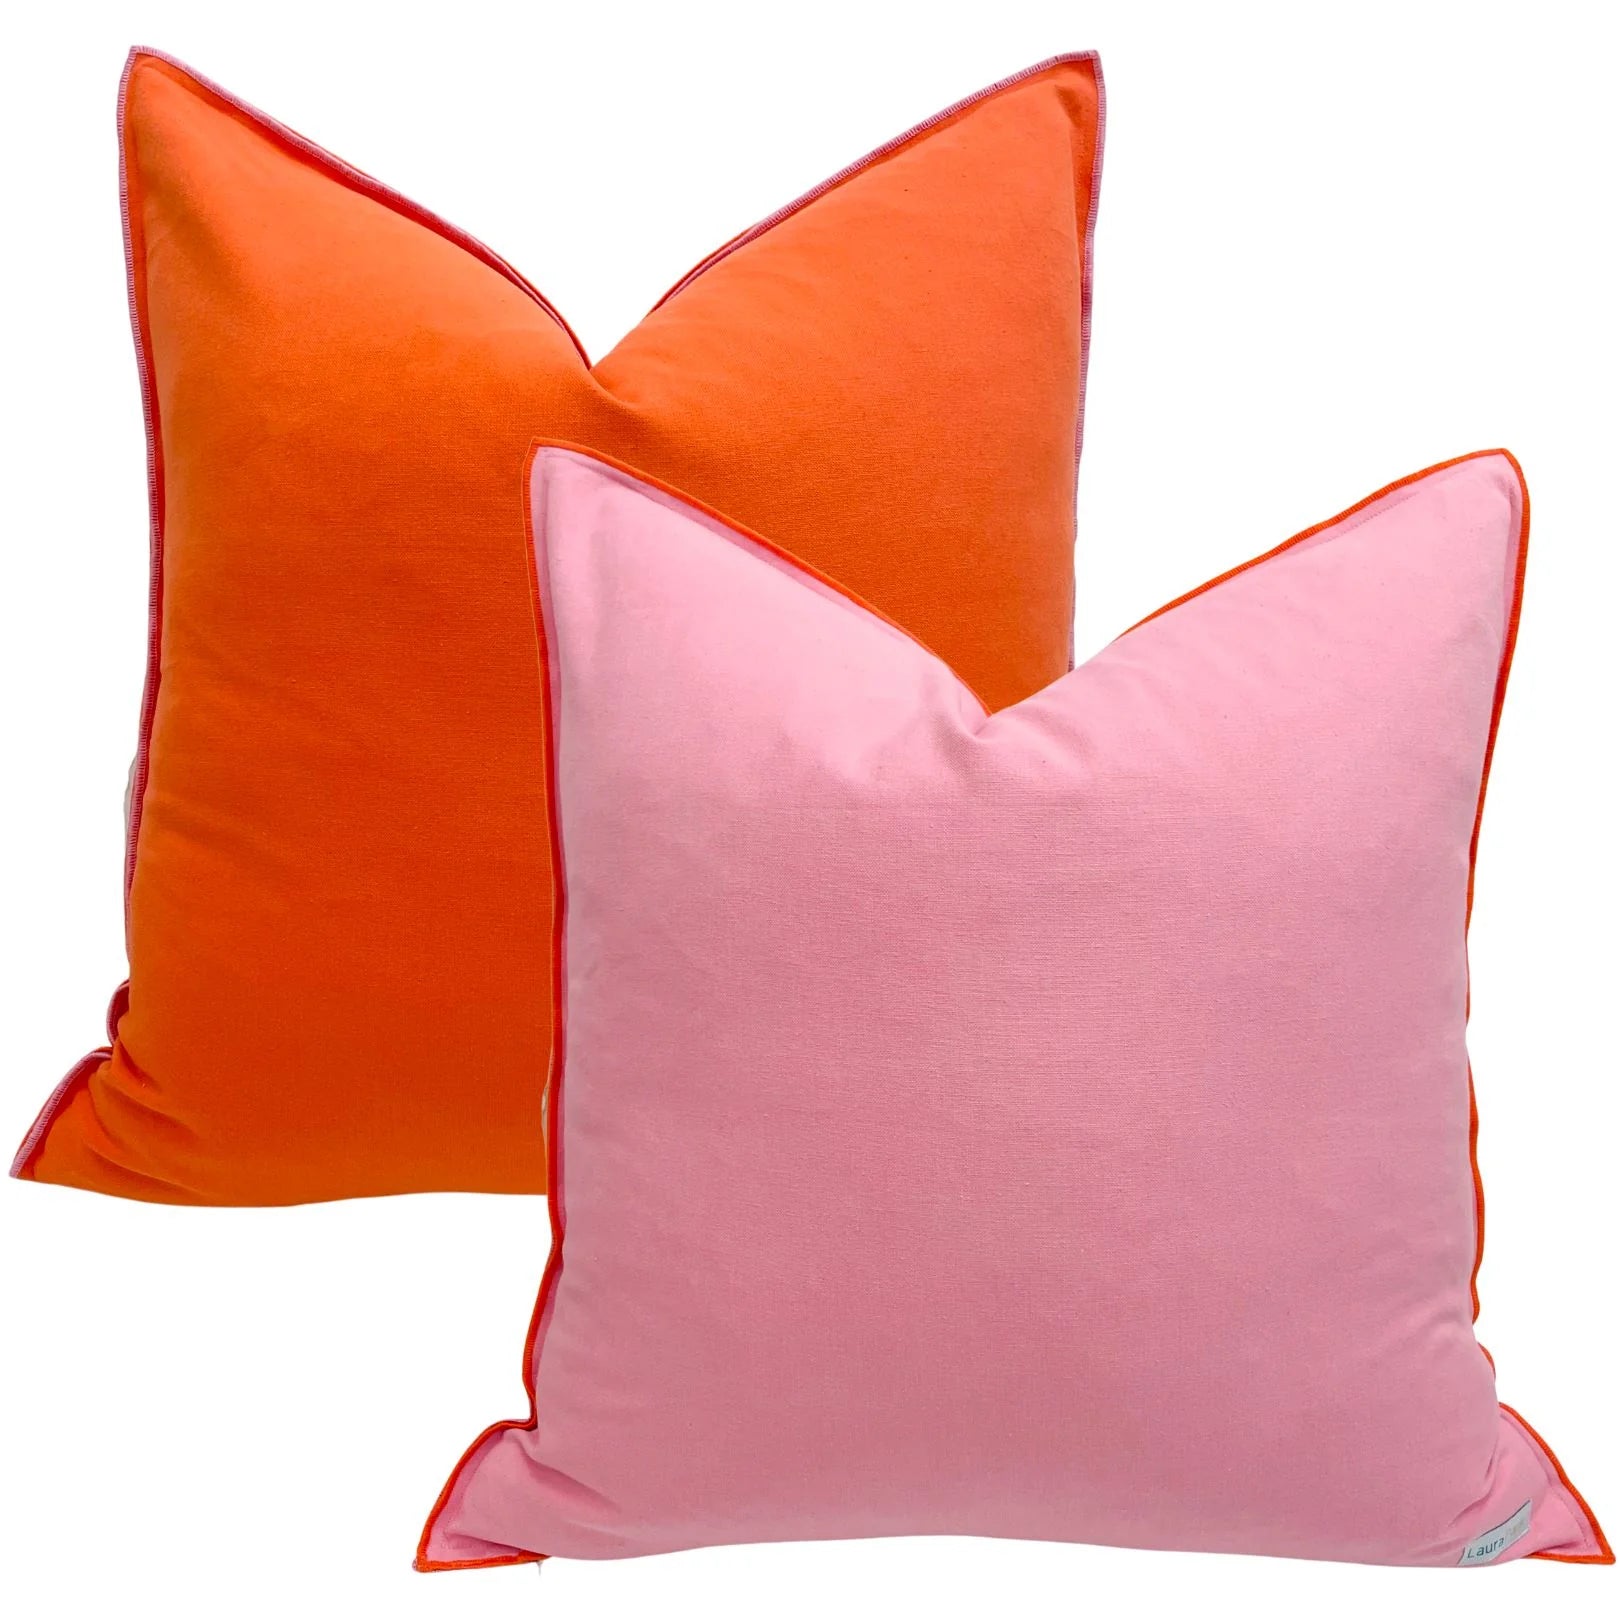 Laura Park Pink/Orange Two-Toned Decorative Pillow, 22